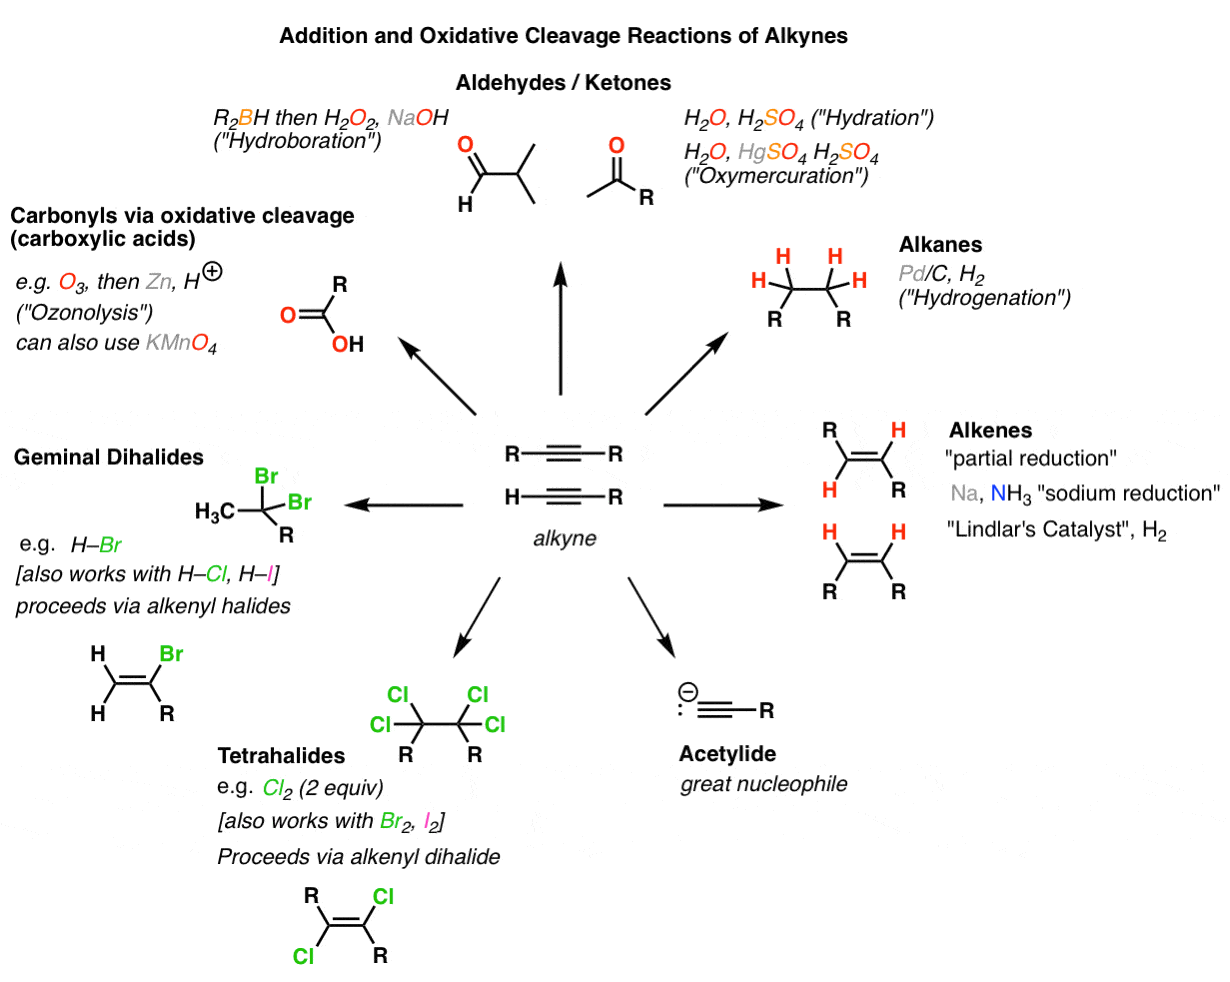 Alkanes Alkenes Alkynes Chart